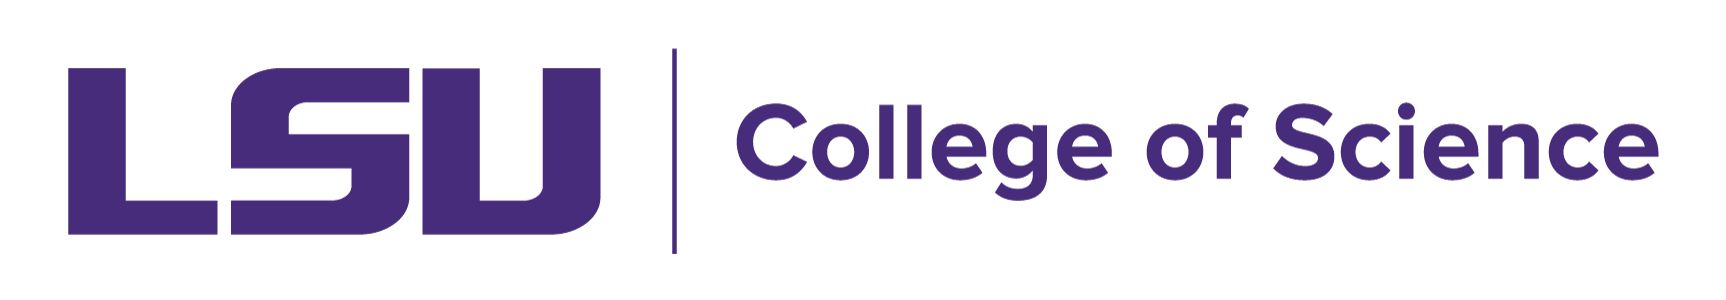 LSU College of Science main logo horizontal